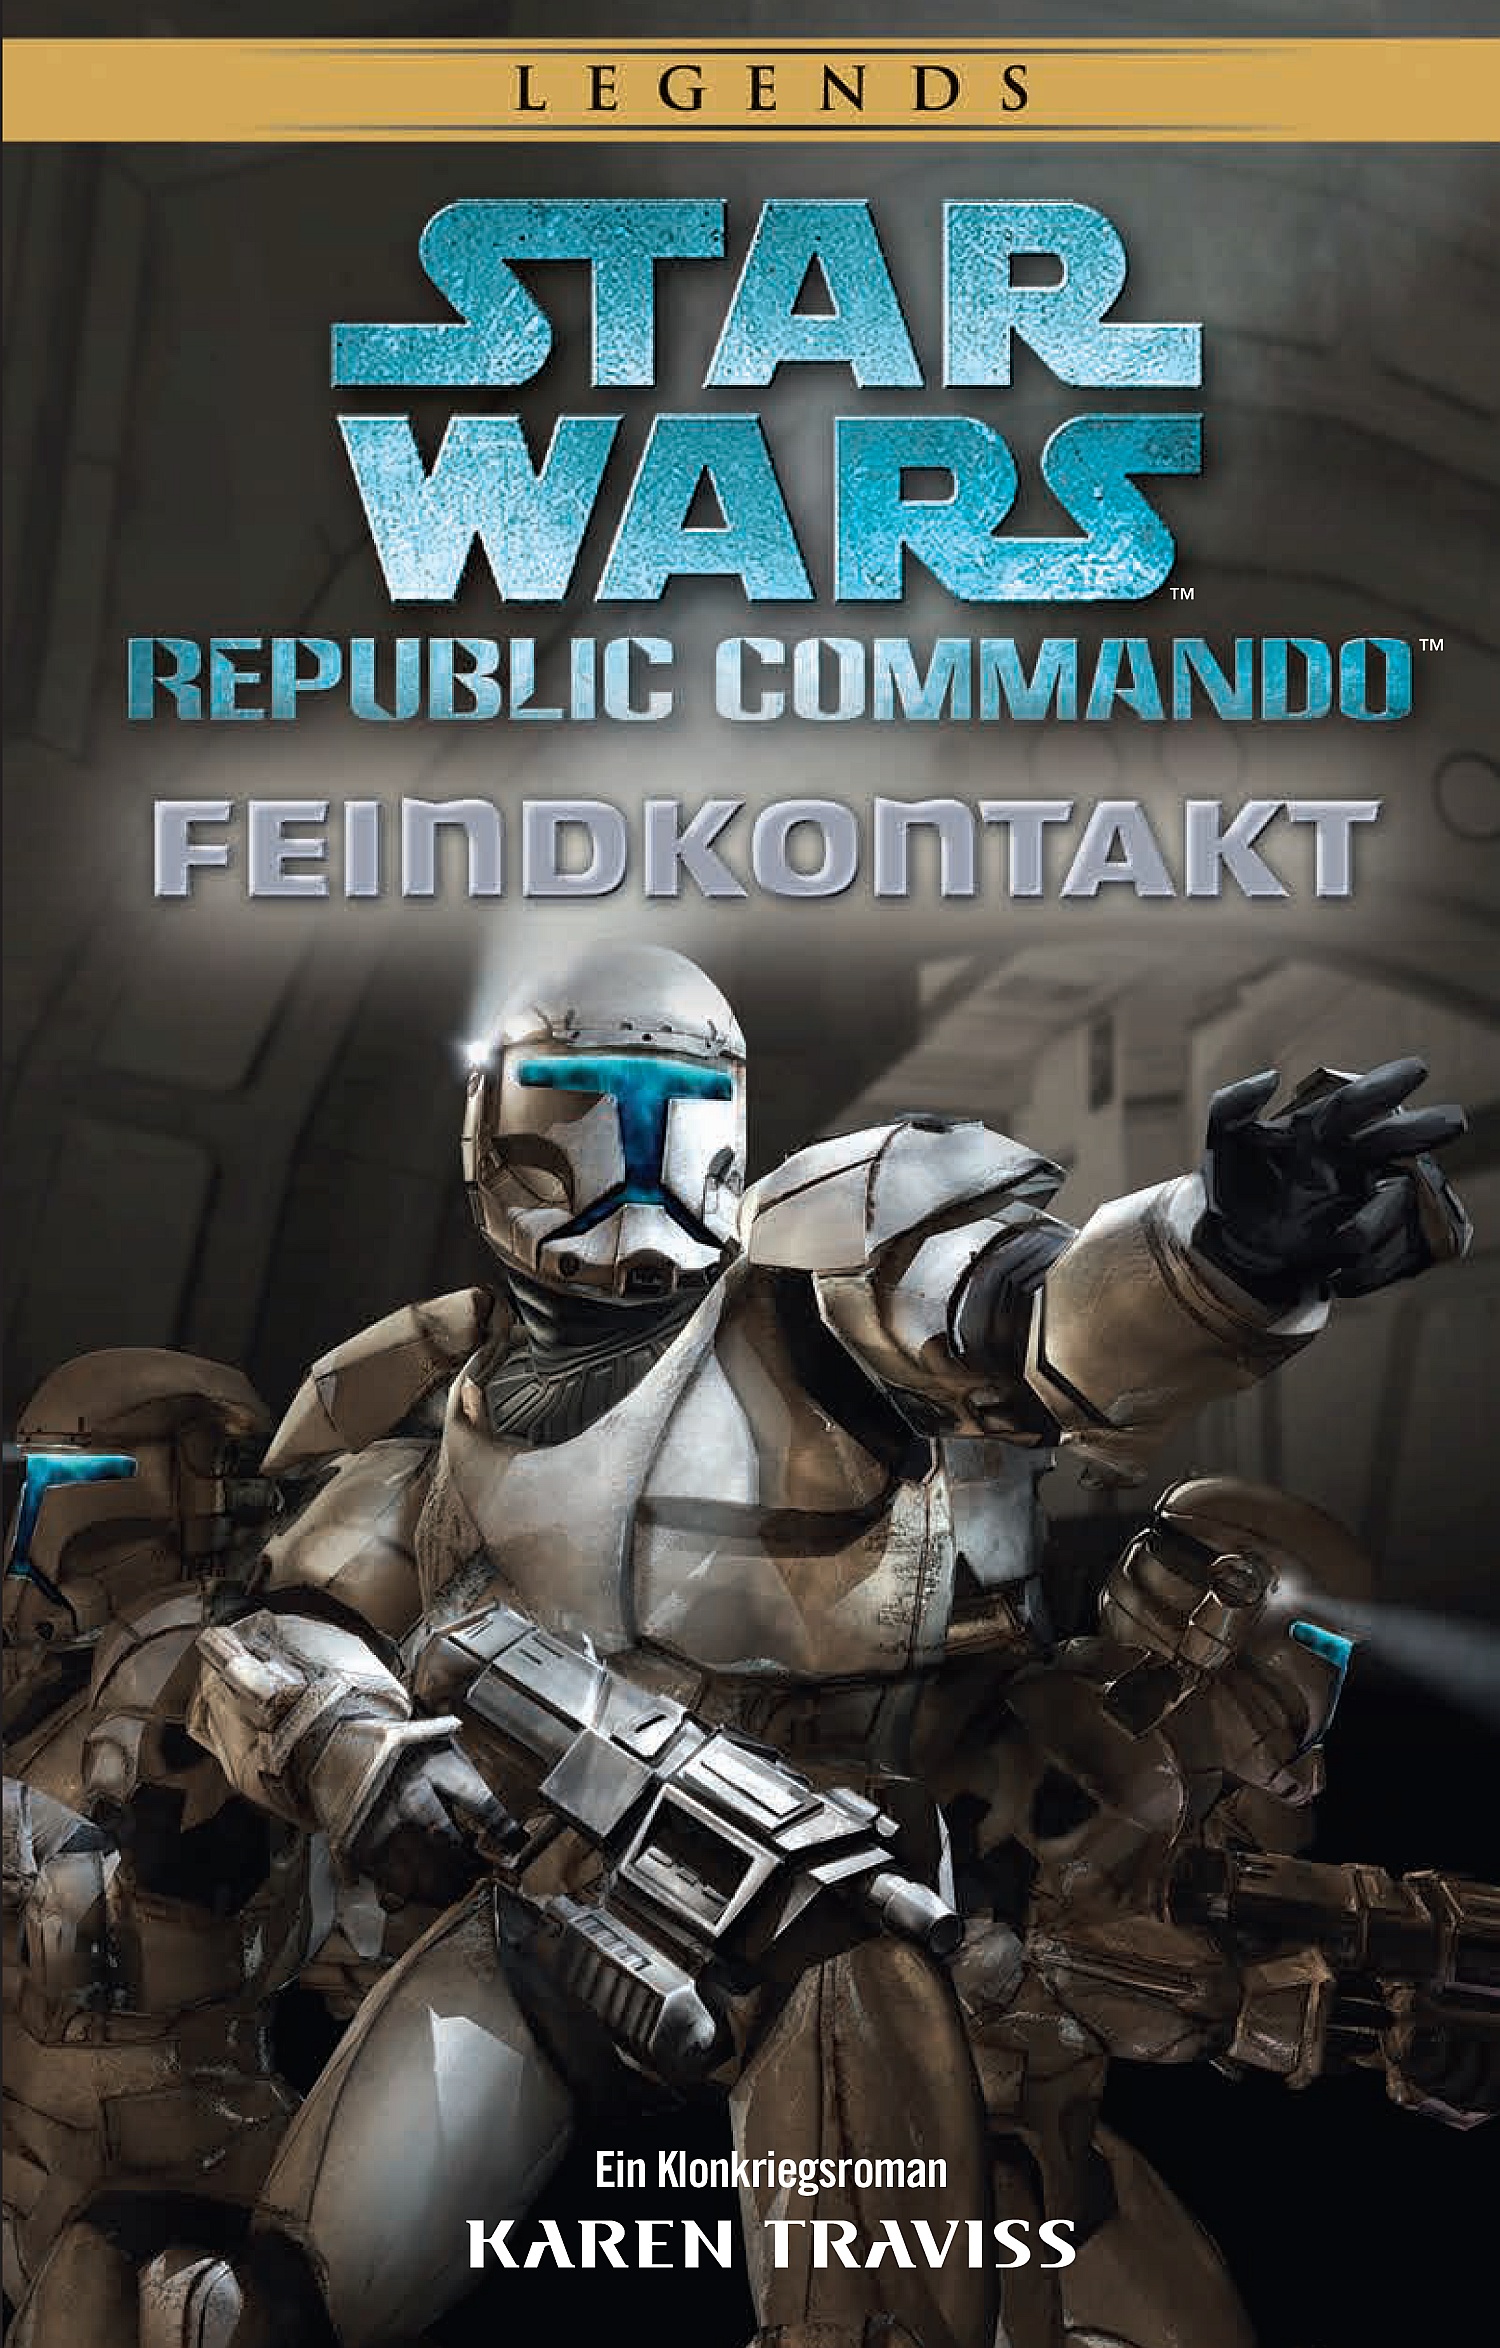 Republic Commando 1: Feindkontakt (26.02.2018)